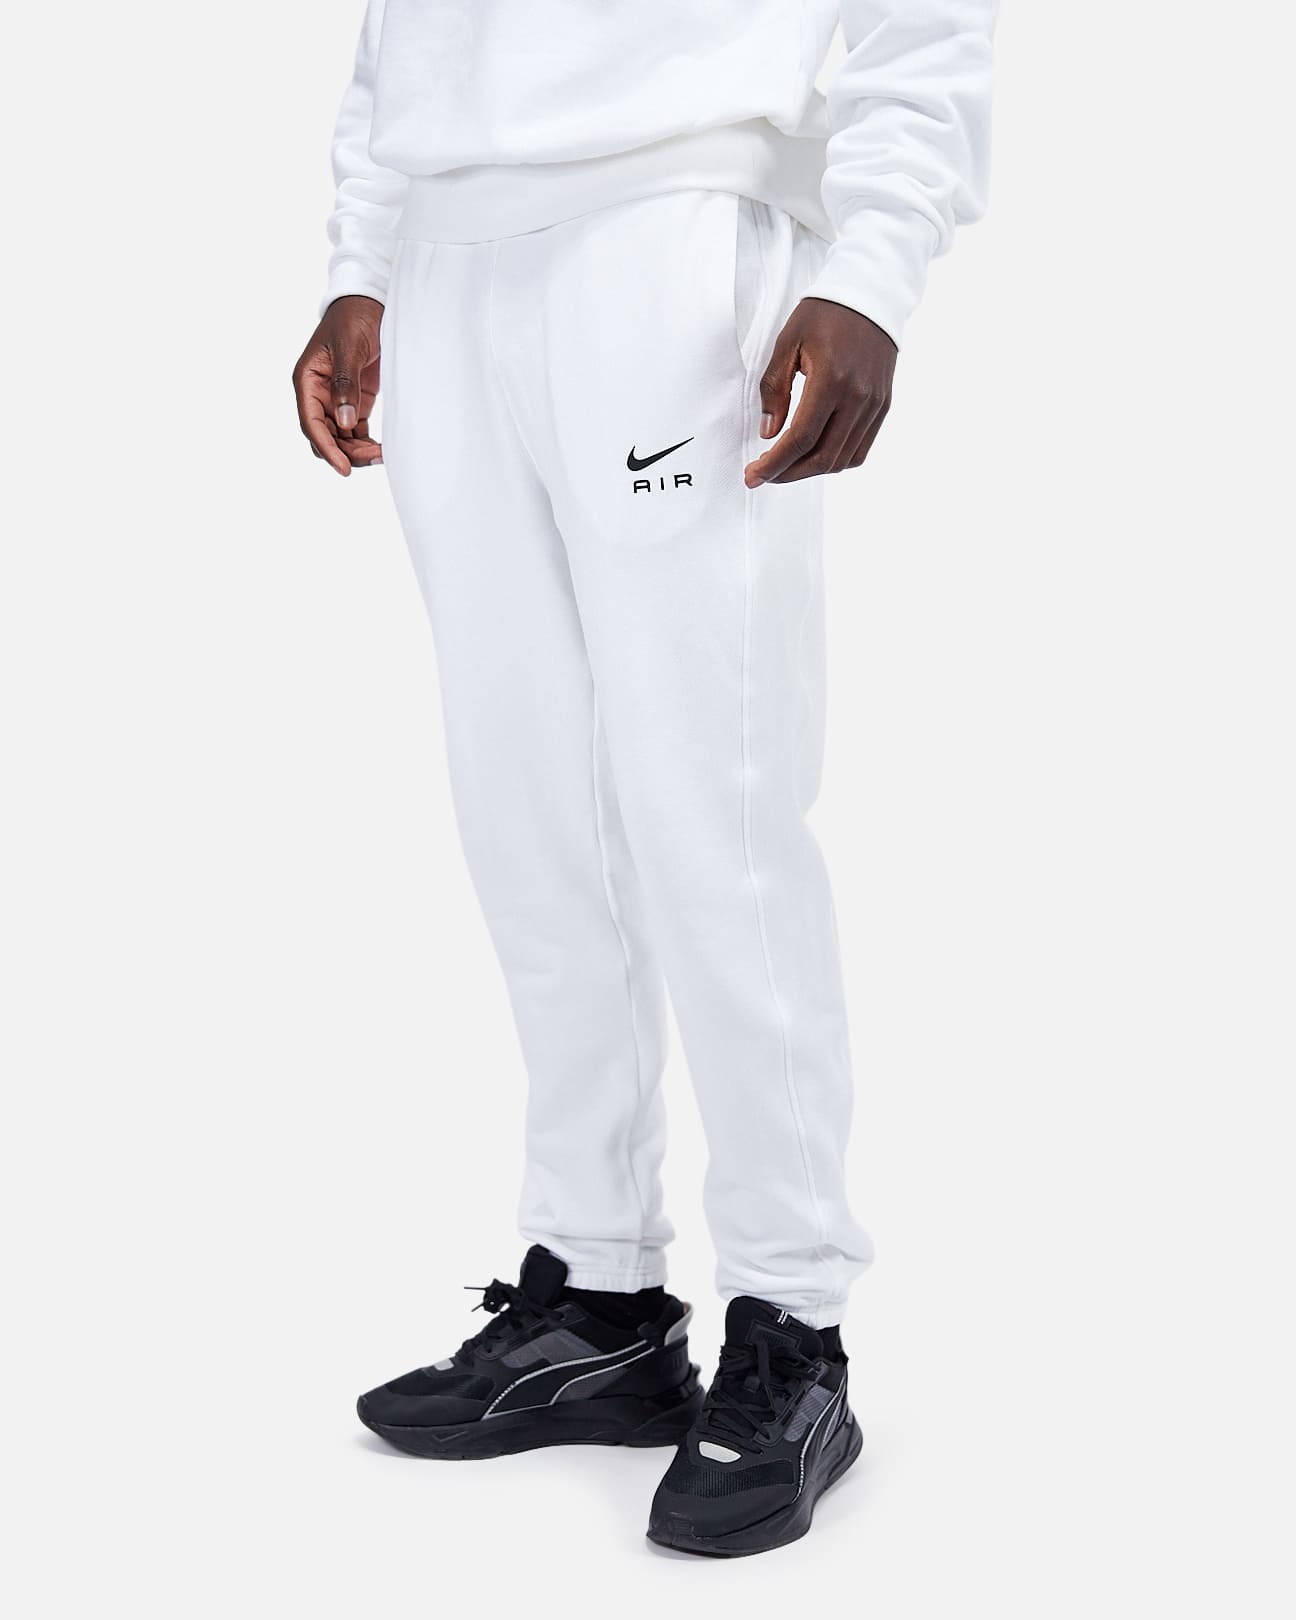 Pantaloni Nike Air - bianchi/neri